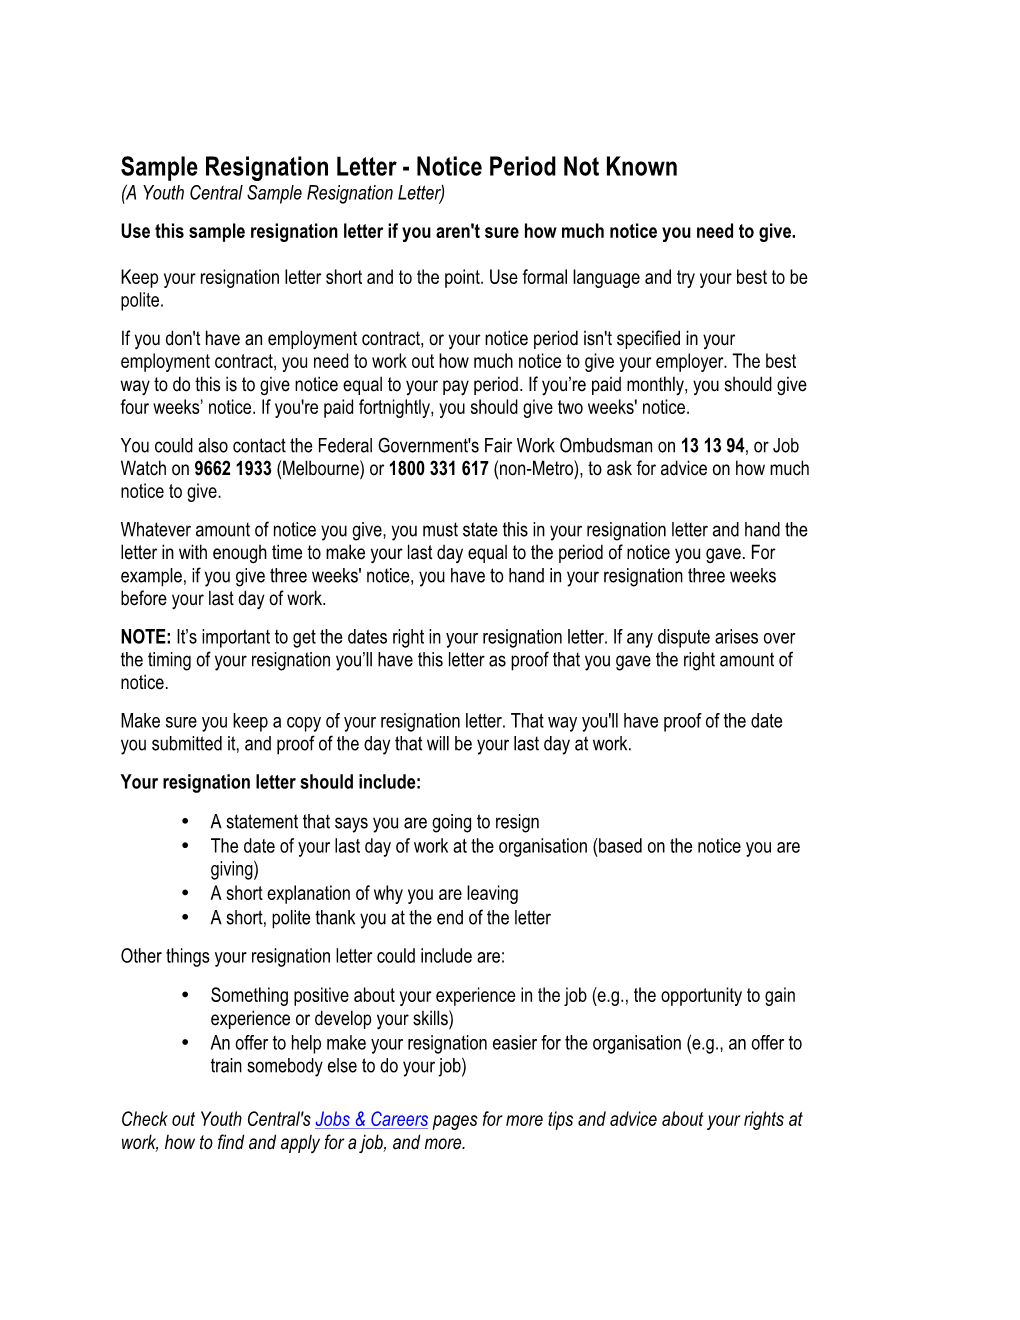 Sample Resignation Letter - Notice Period Not Known (A Youth Central Sample Resignation Letter)